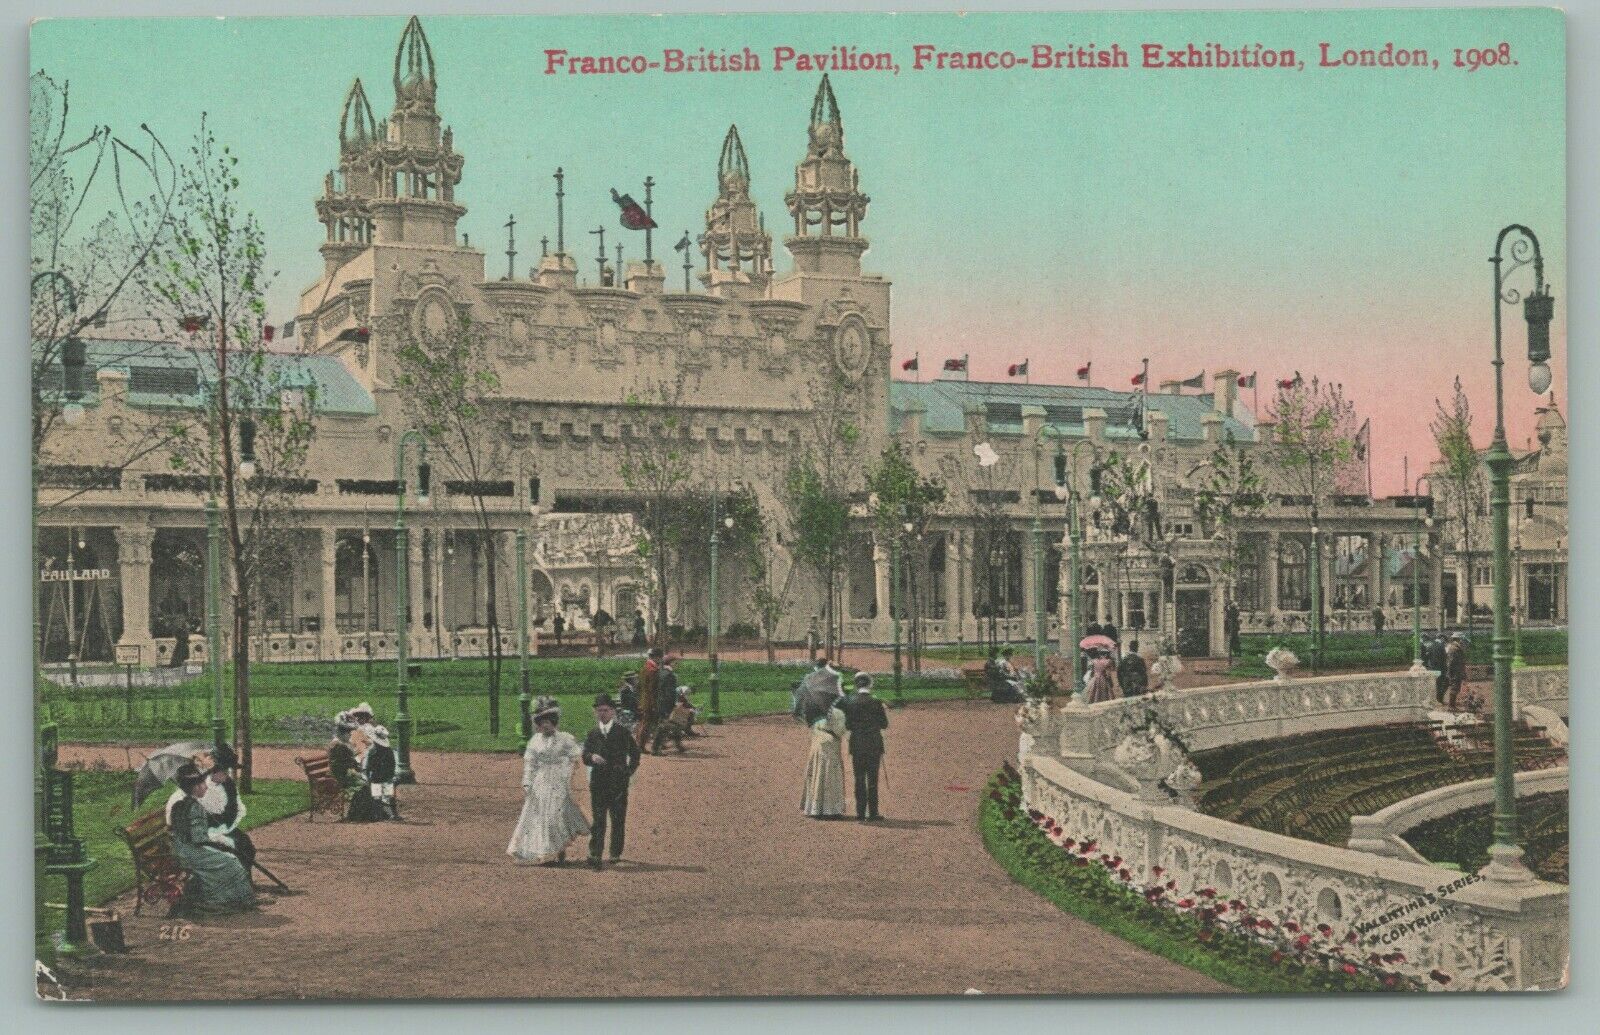 London~Franco British Exhibition~Franco British Pavilion~Postcard~1908